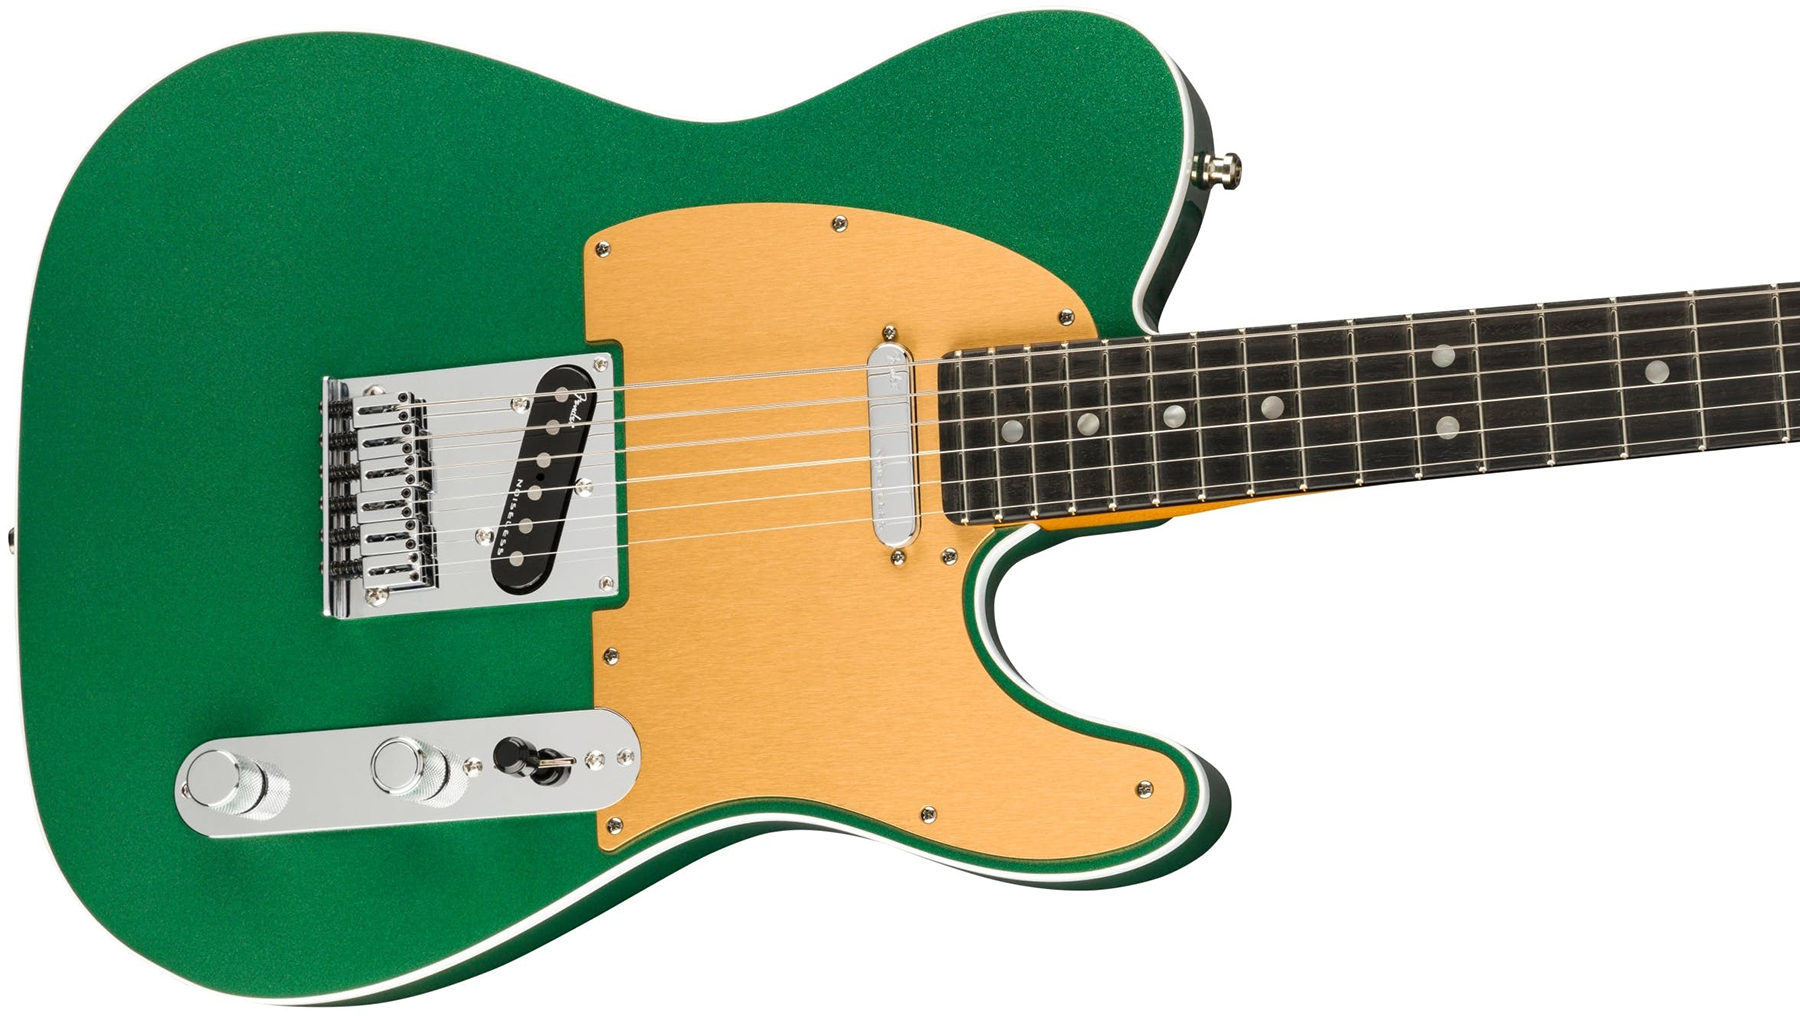 Fender Tele American Ultra Fsr Ltd Usa 2s Ht Eb - Mystic Pine Green - Tel shape electric guitar - Variation 2